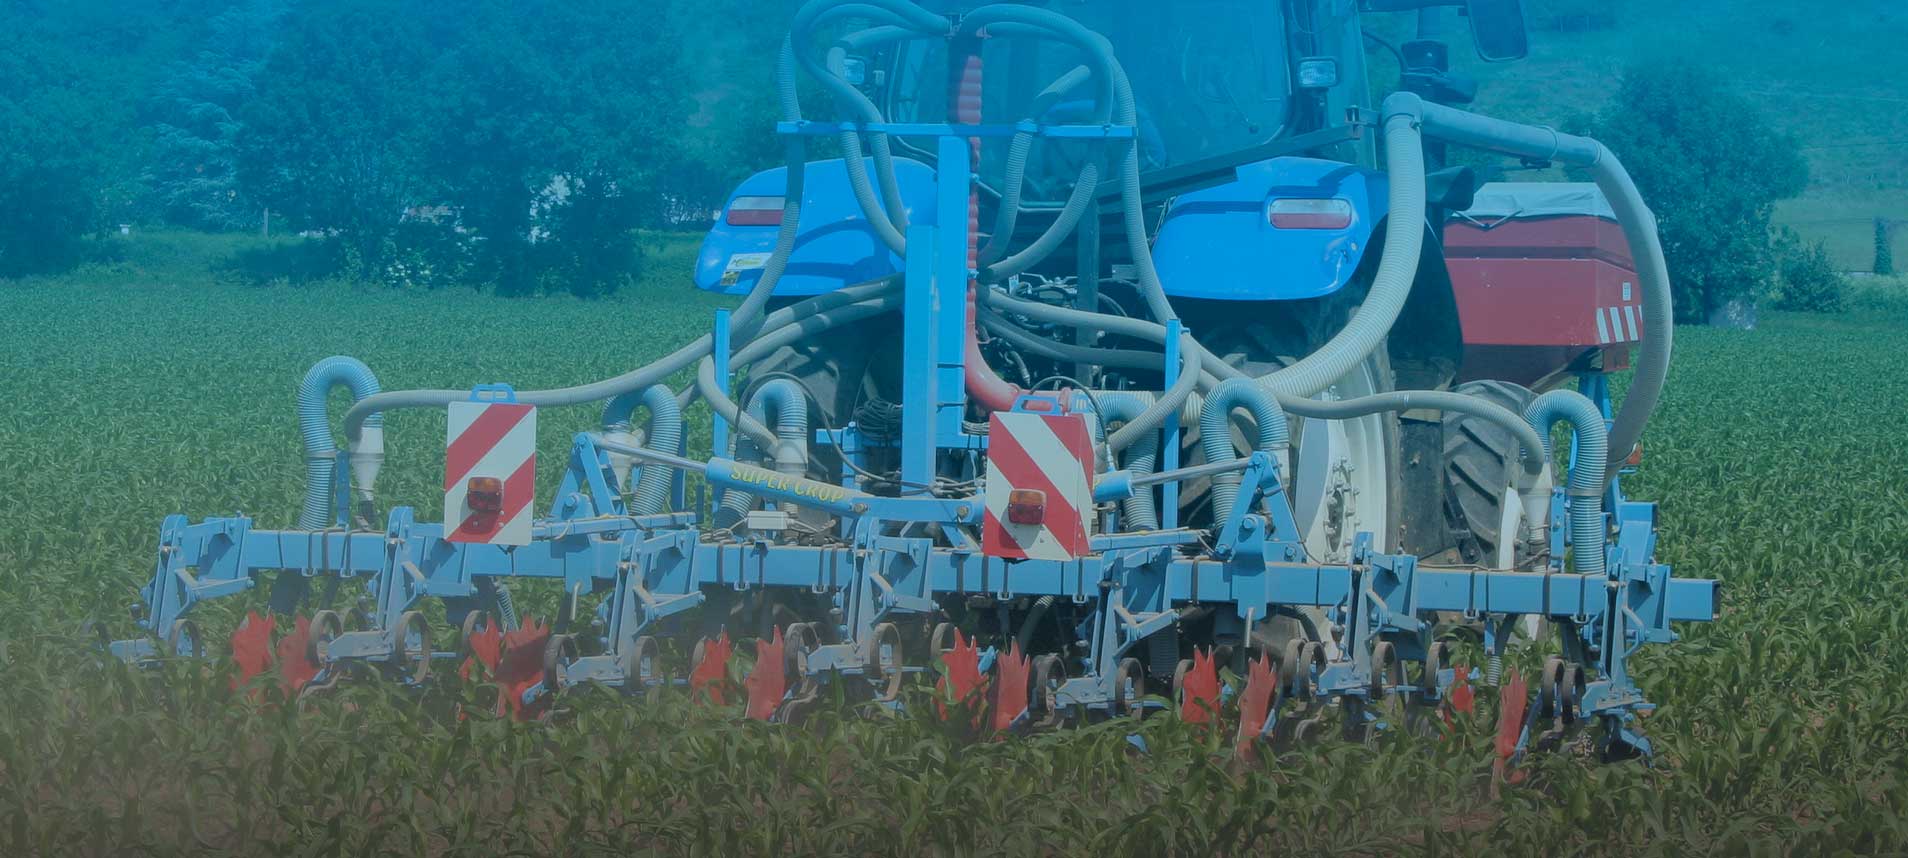 Photo of a Supercrop cultivator